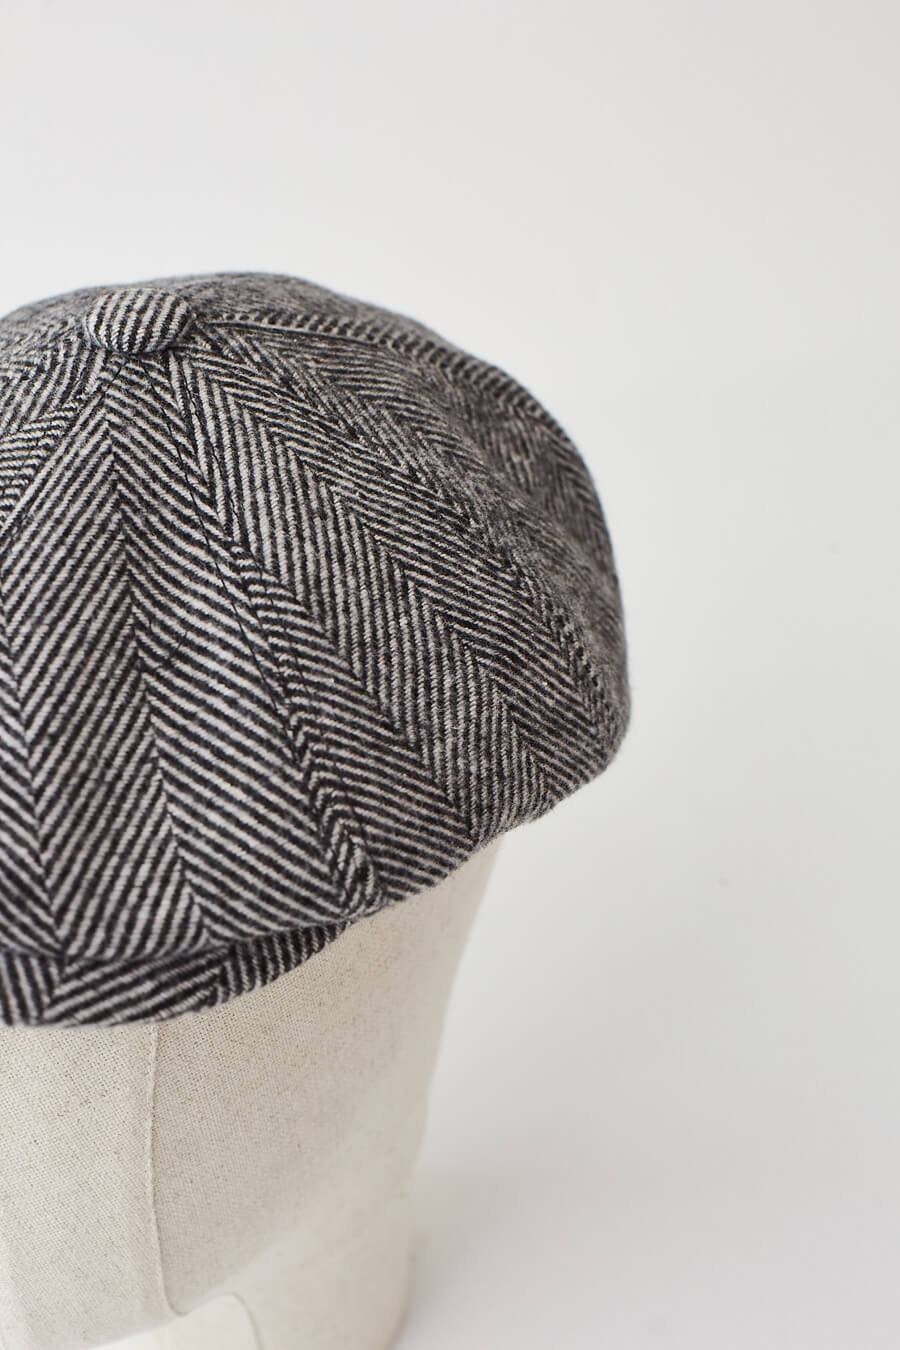 Hat Black White English Style Tweed Hat Mens Hat | Etsy